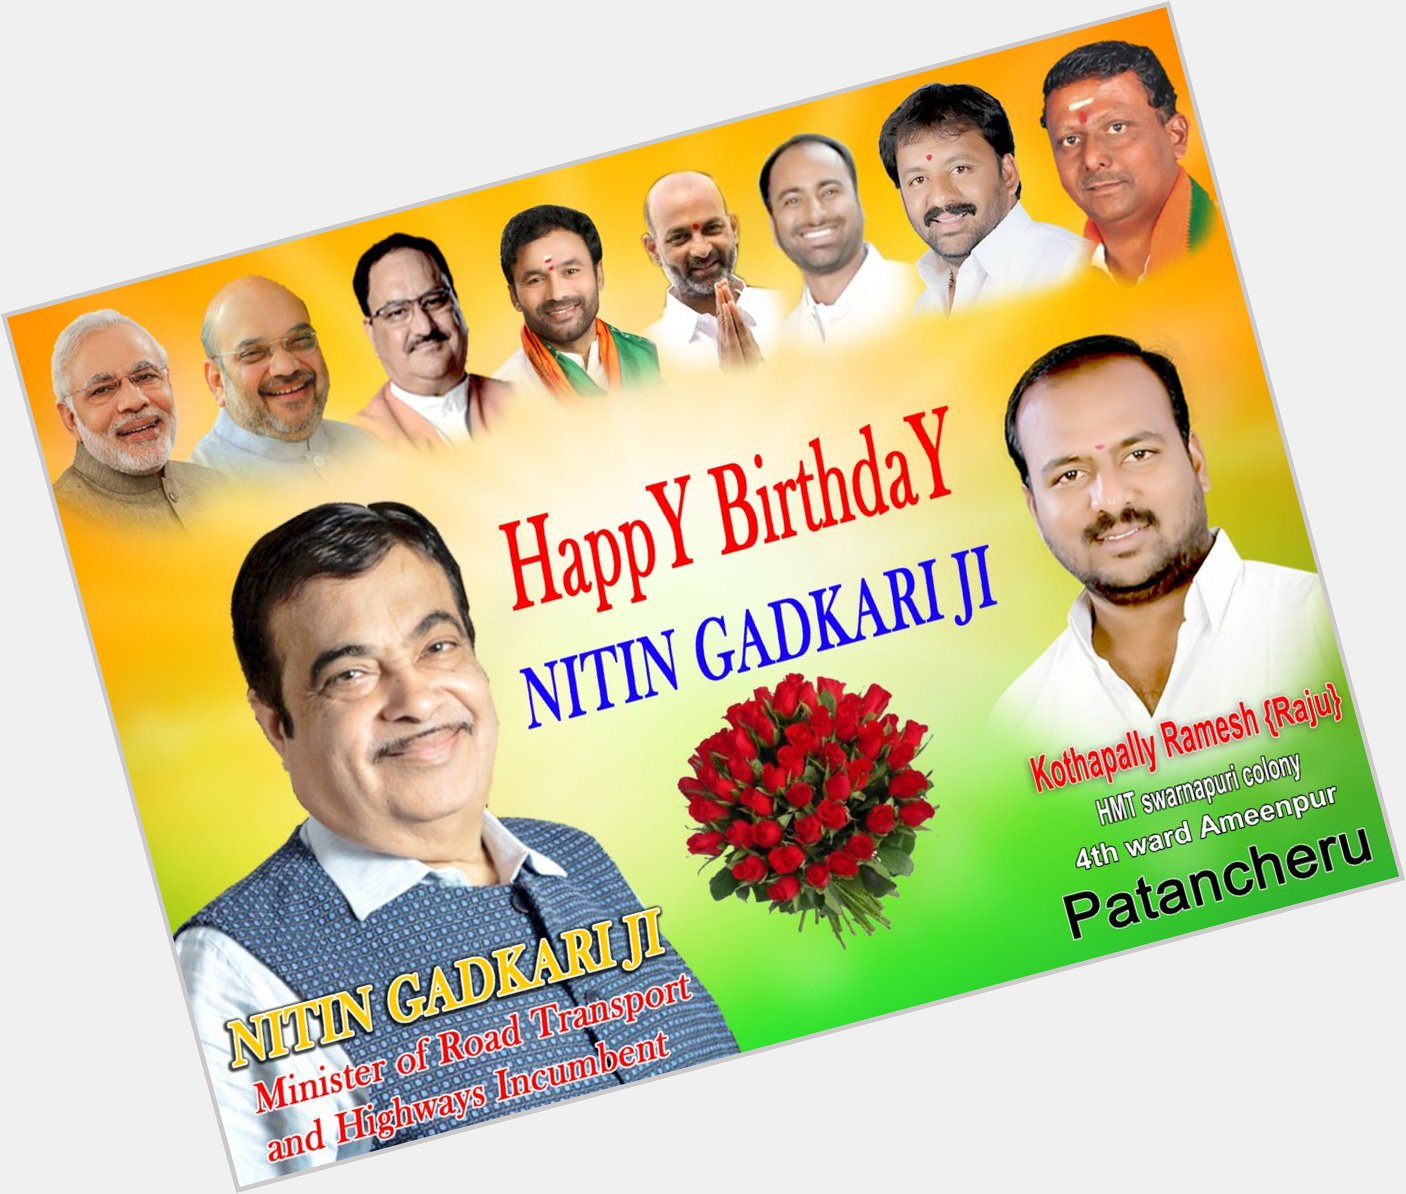 Happy Birthday to you nitin gadkari ji 